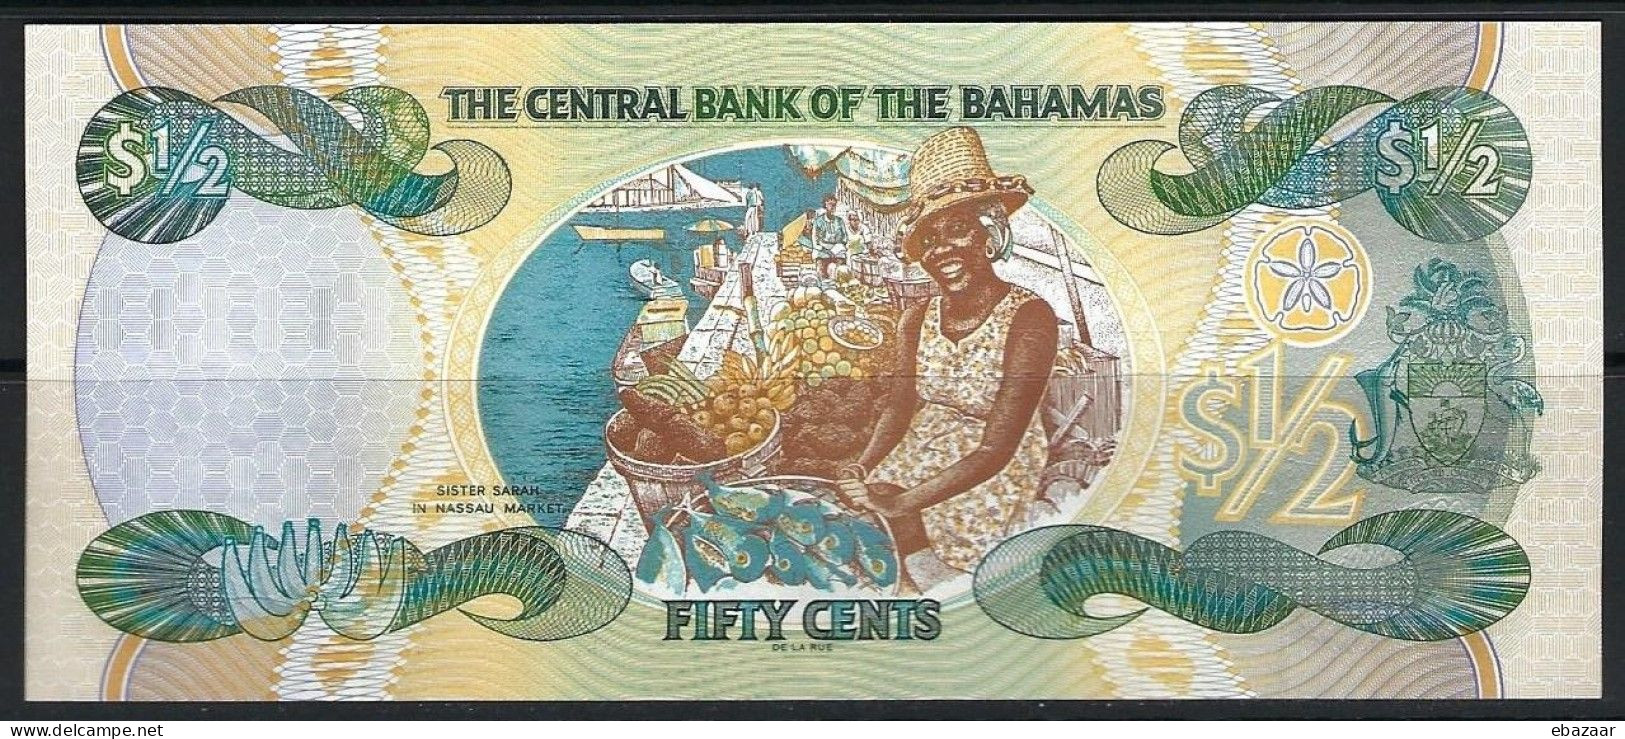 Bahamas 2001 Banknotes 1/2 Dollar Fifty Cents UNC P-68a Consecutive Serial Number Available - Bahama's